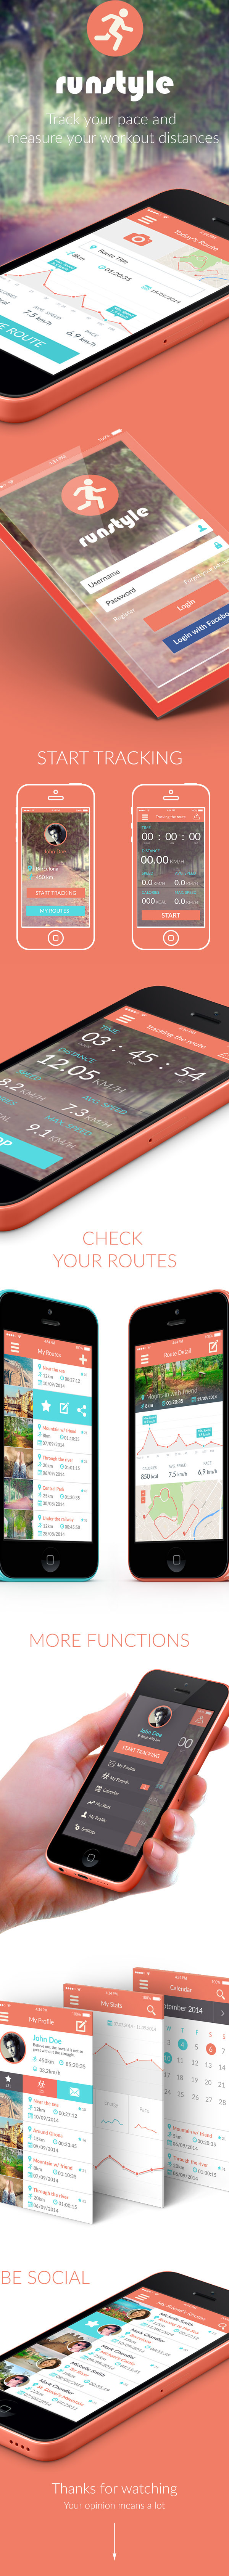 app UI ux Interface mobile phone mobile design iphone elegant flat clean blue pink colorful sport